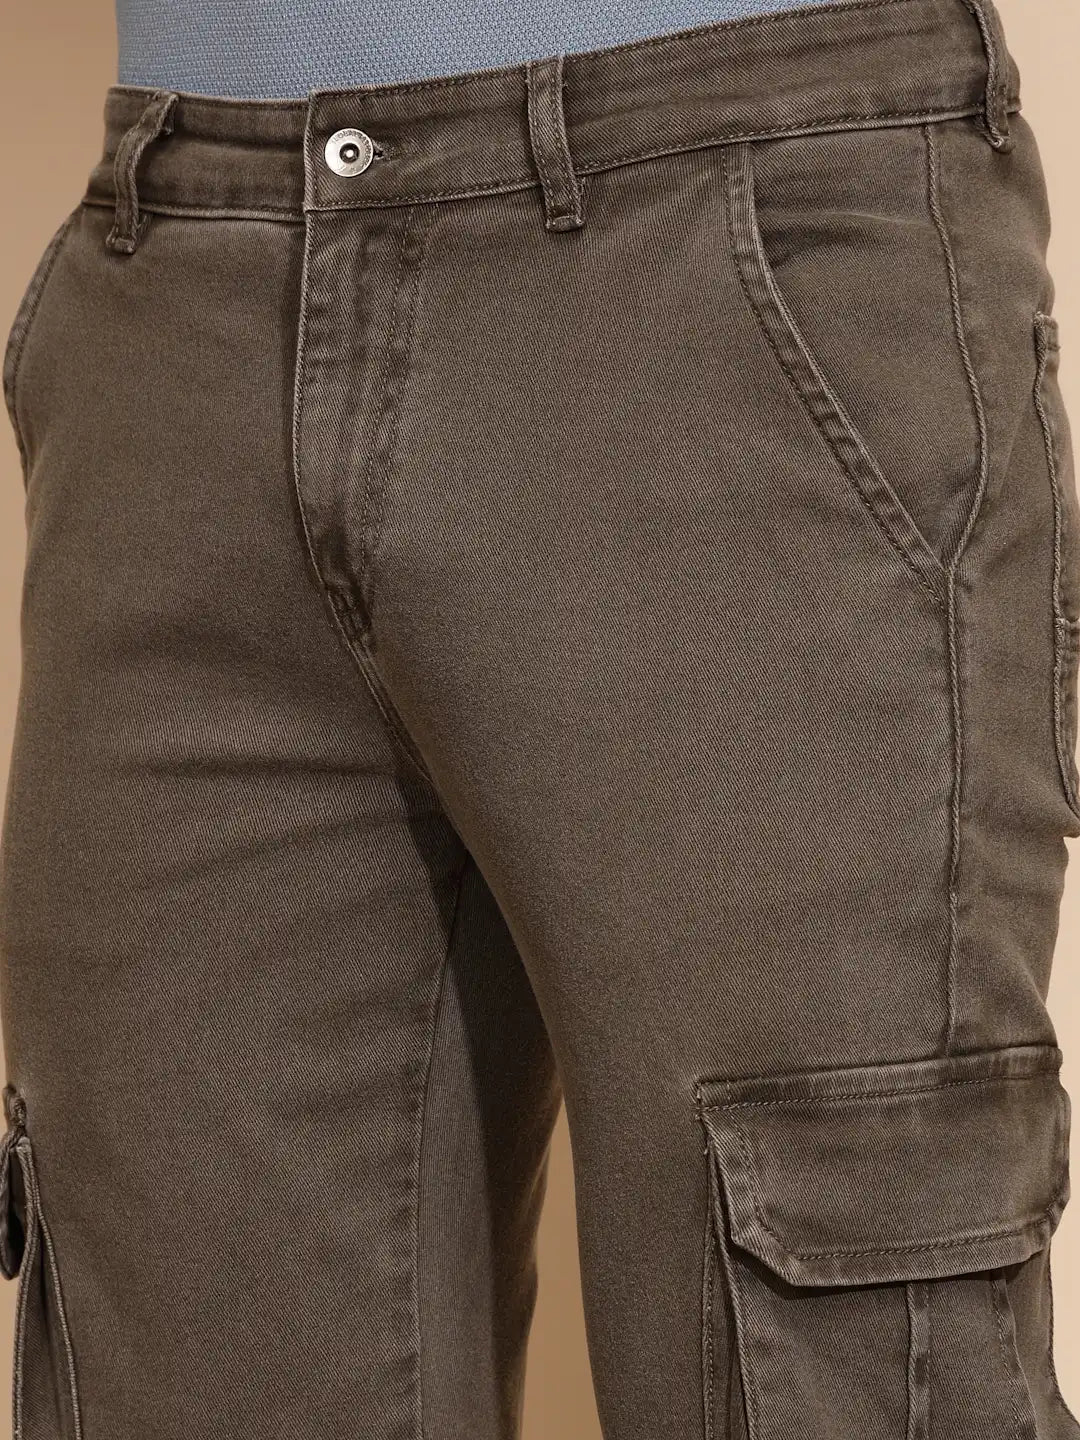 Grey Cotton Regular Fit Cargo Pant For Men